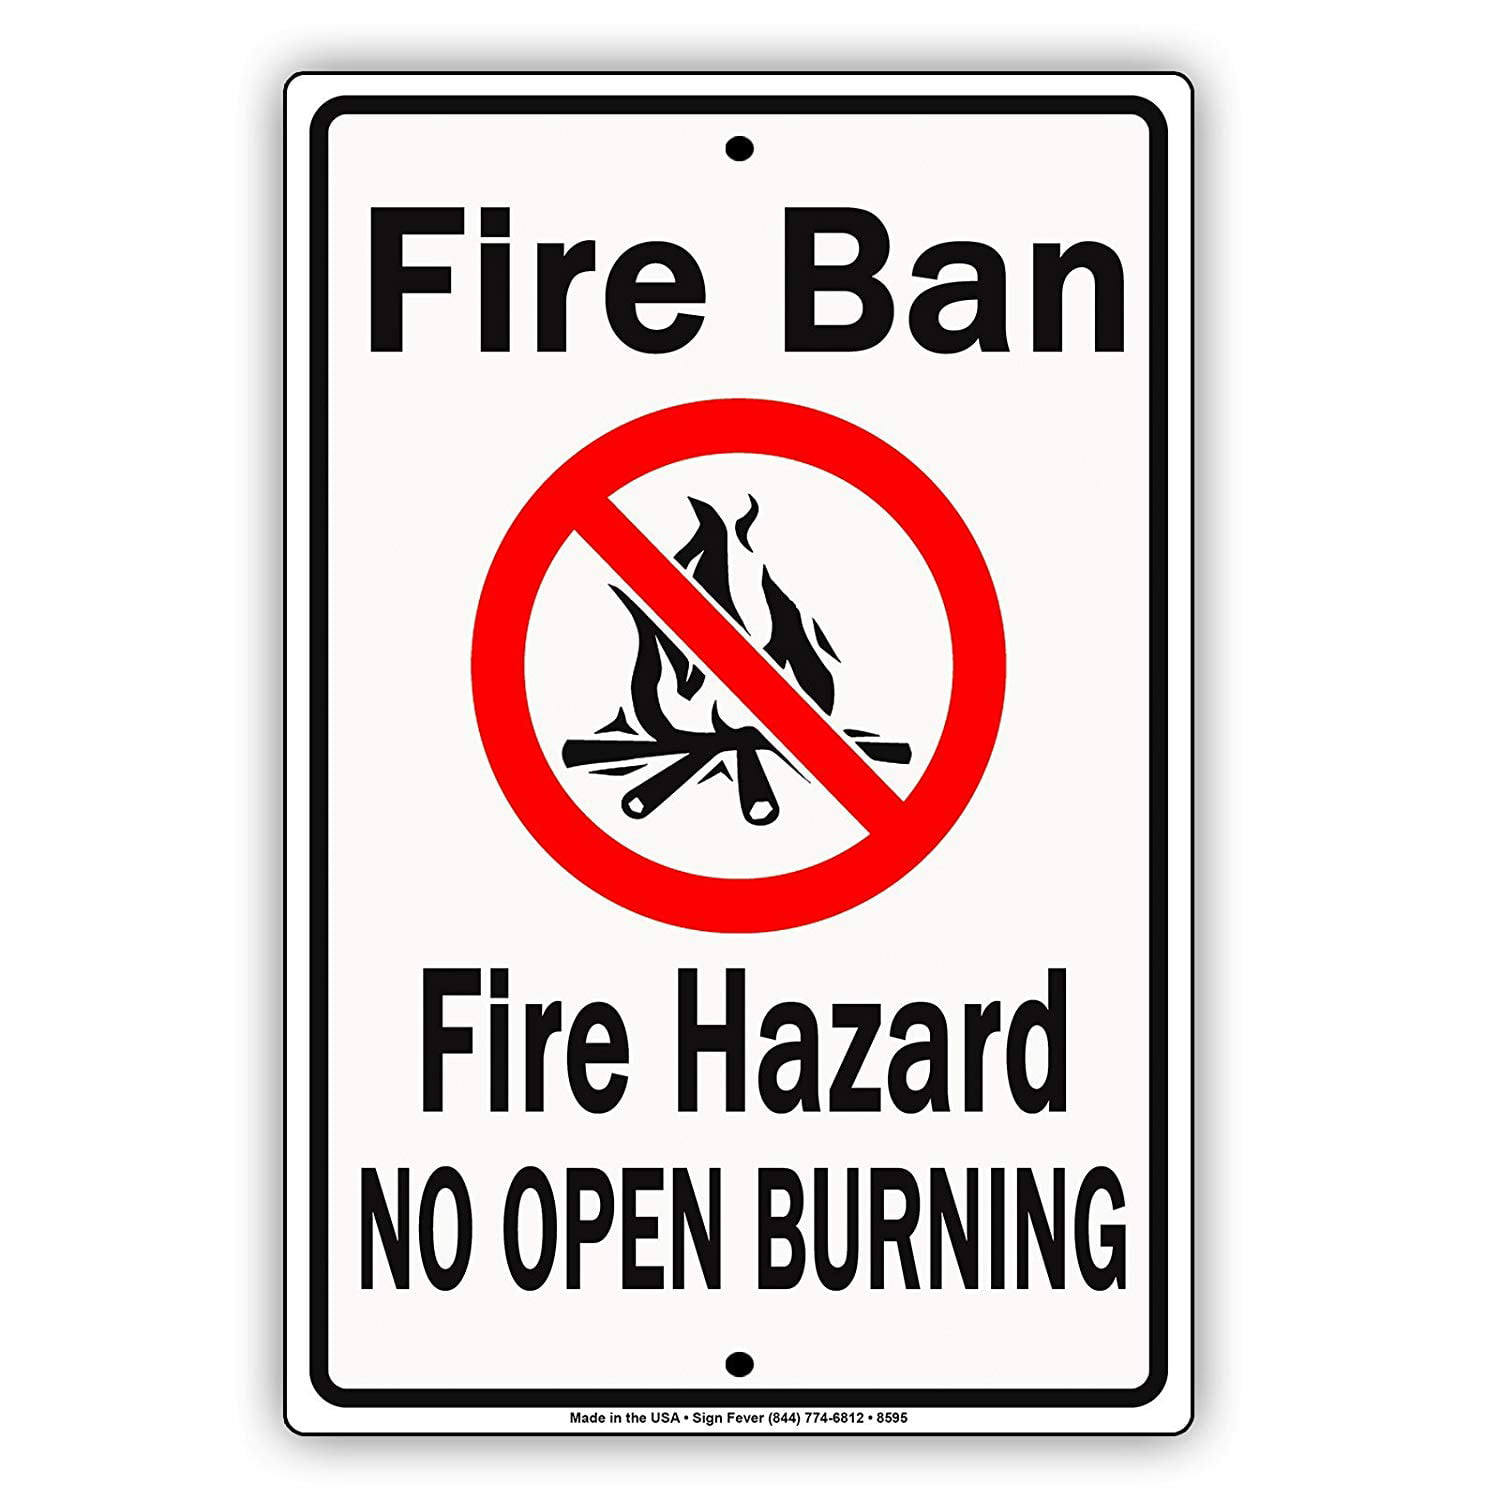 Ban service. Fire Hazard Sing. Fire ban sign. No Hazard. No open.